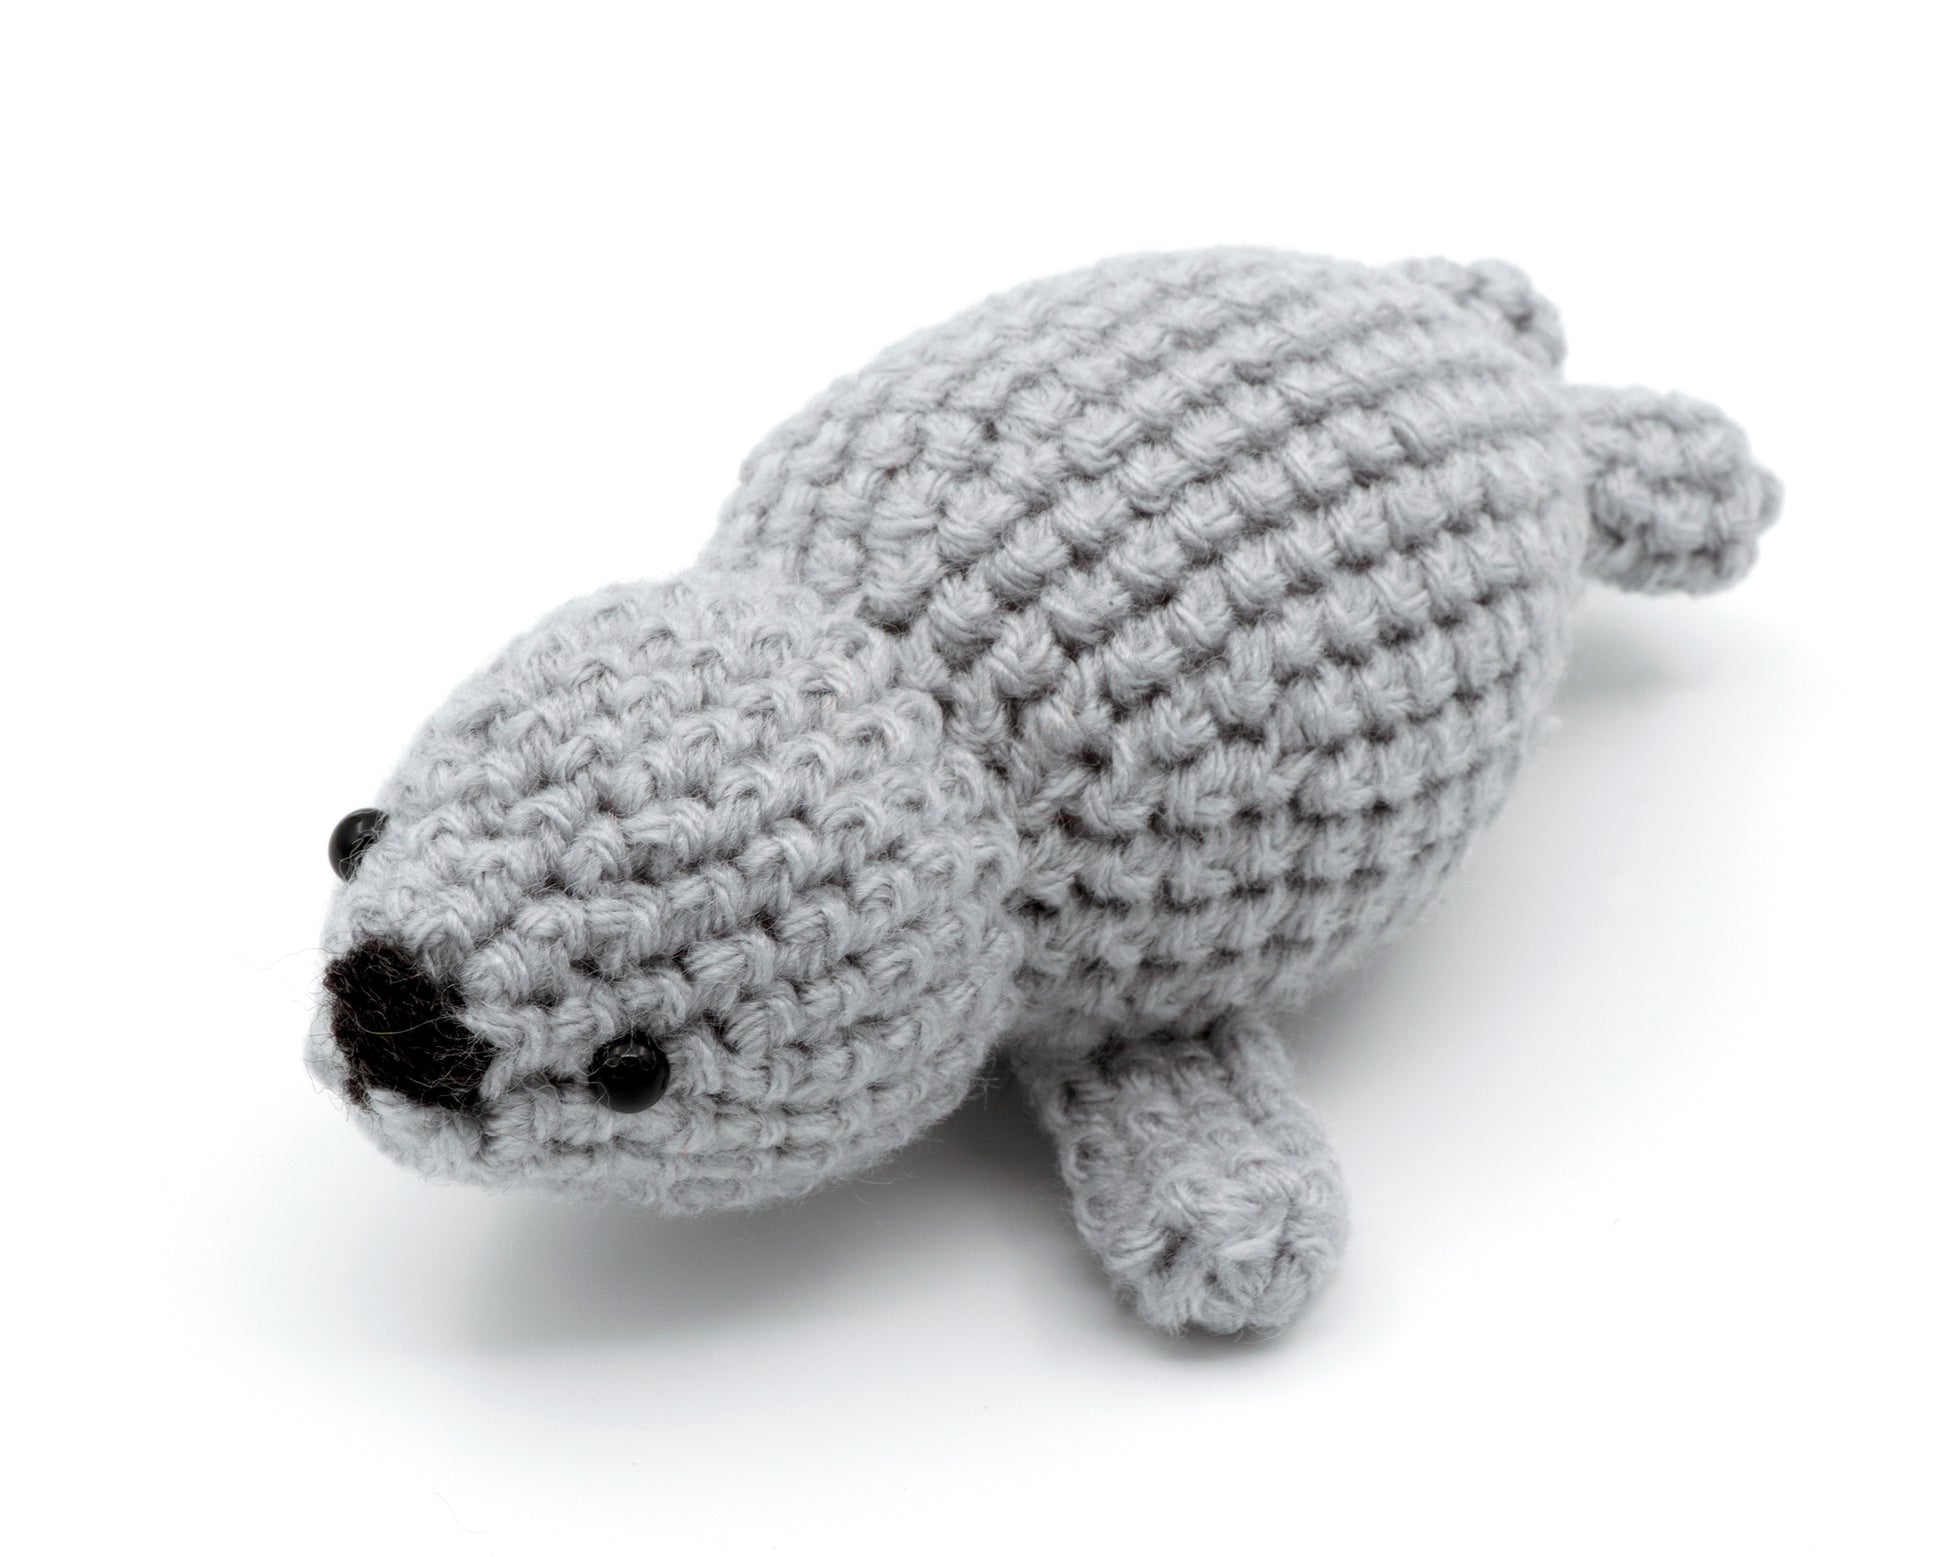 amigurumi crochet baby seal pattern three quarter view